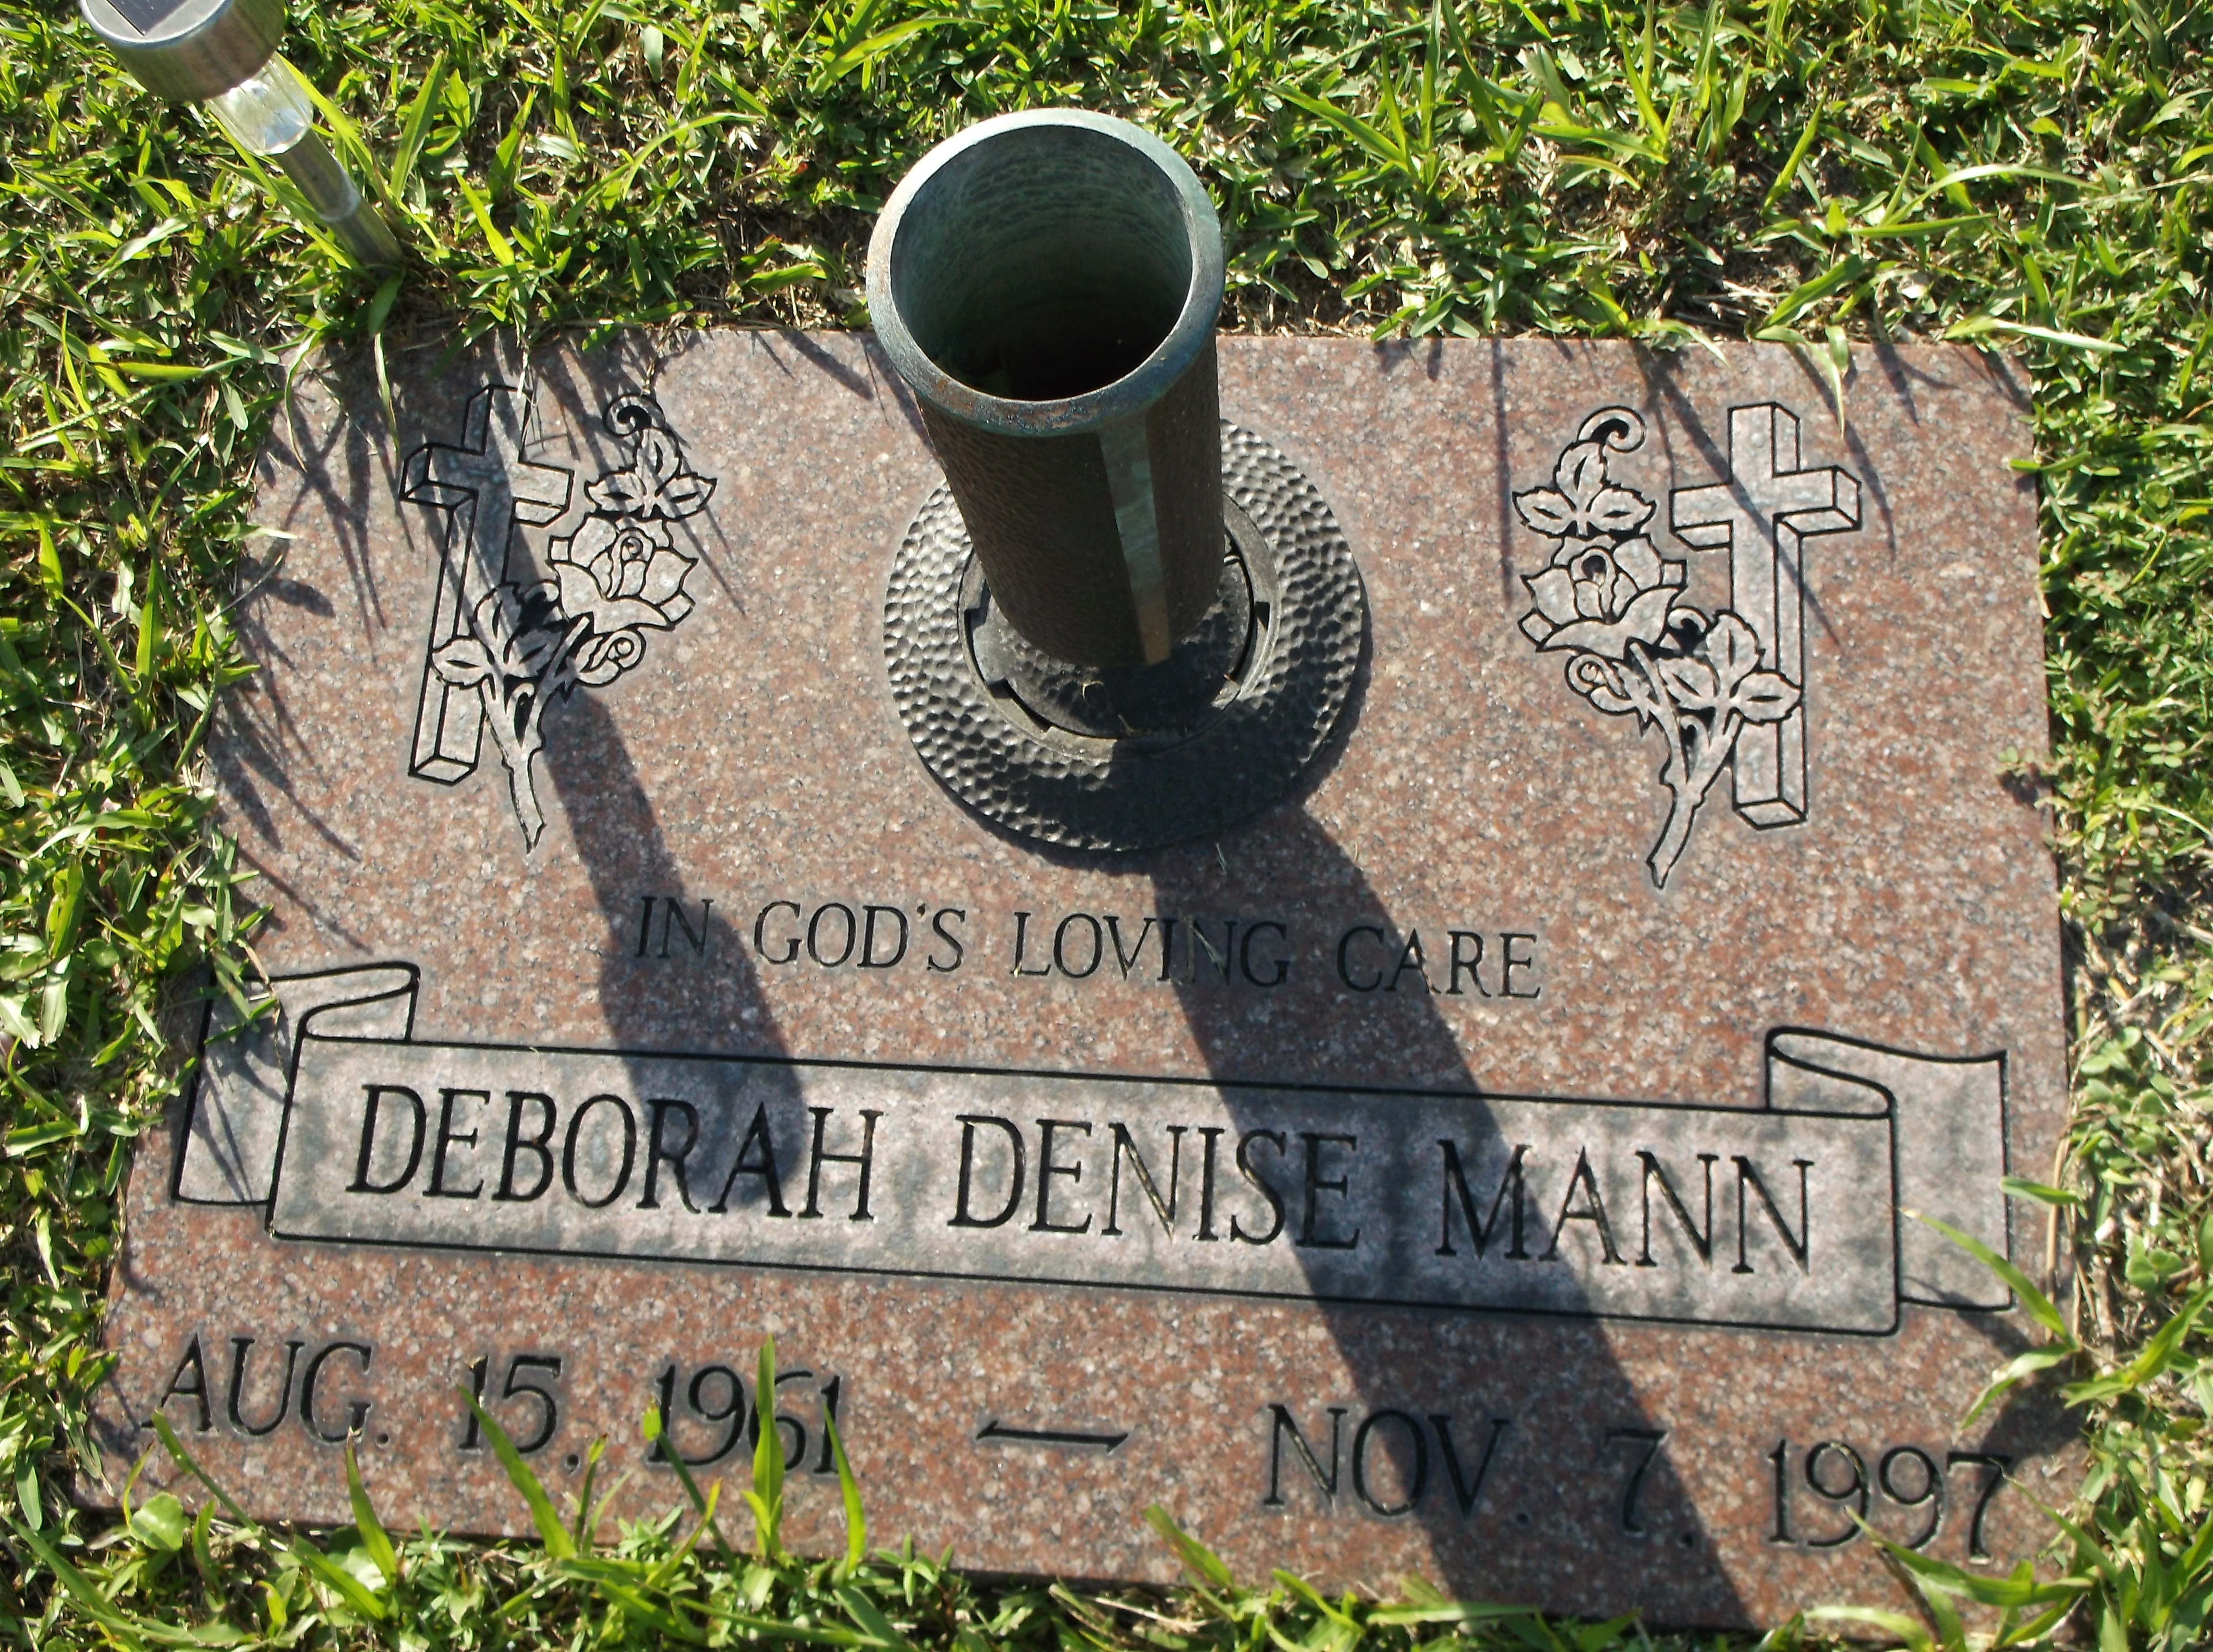 Deborah Denise Mann